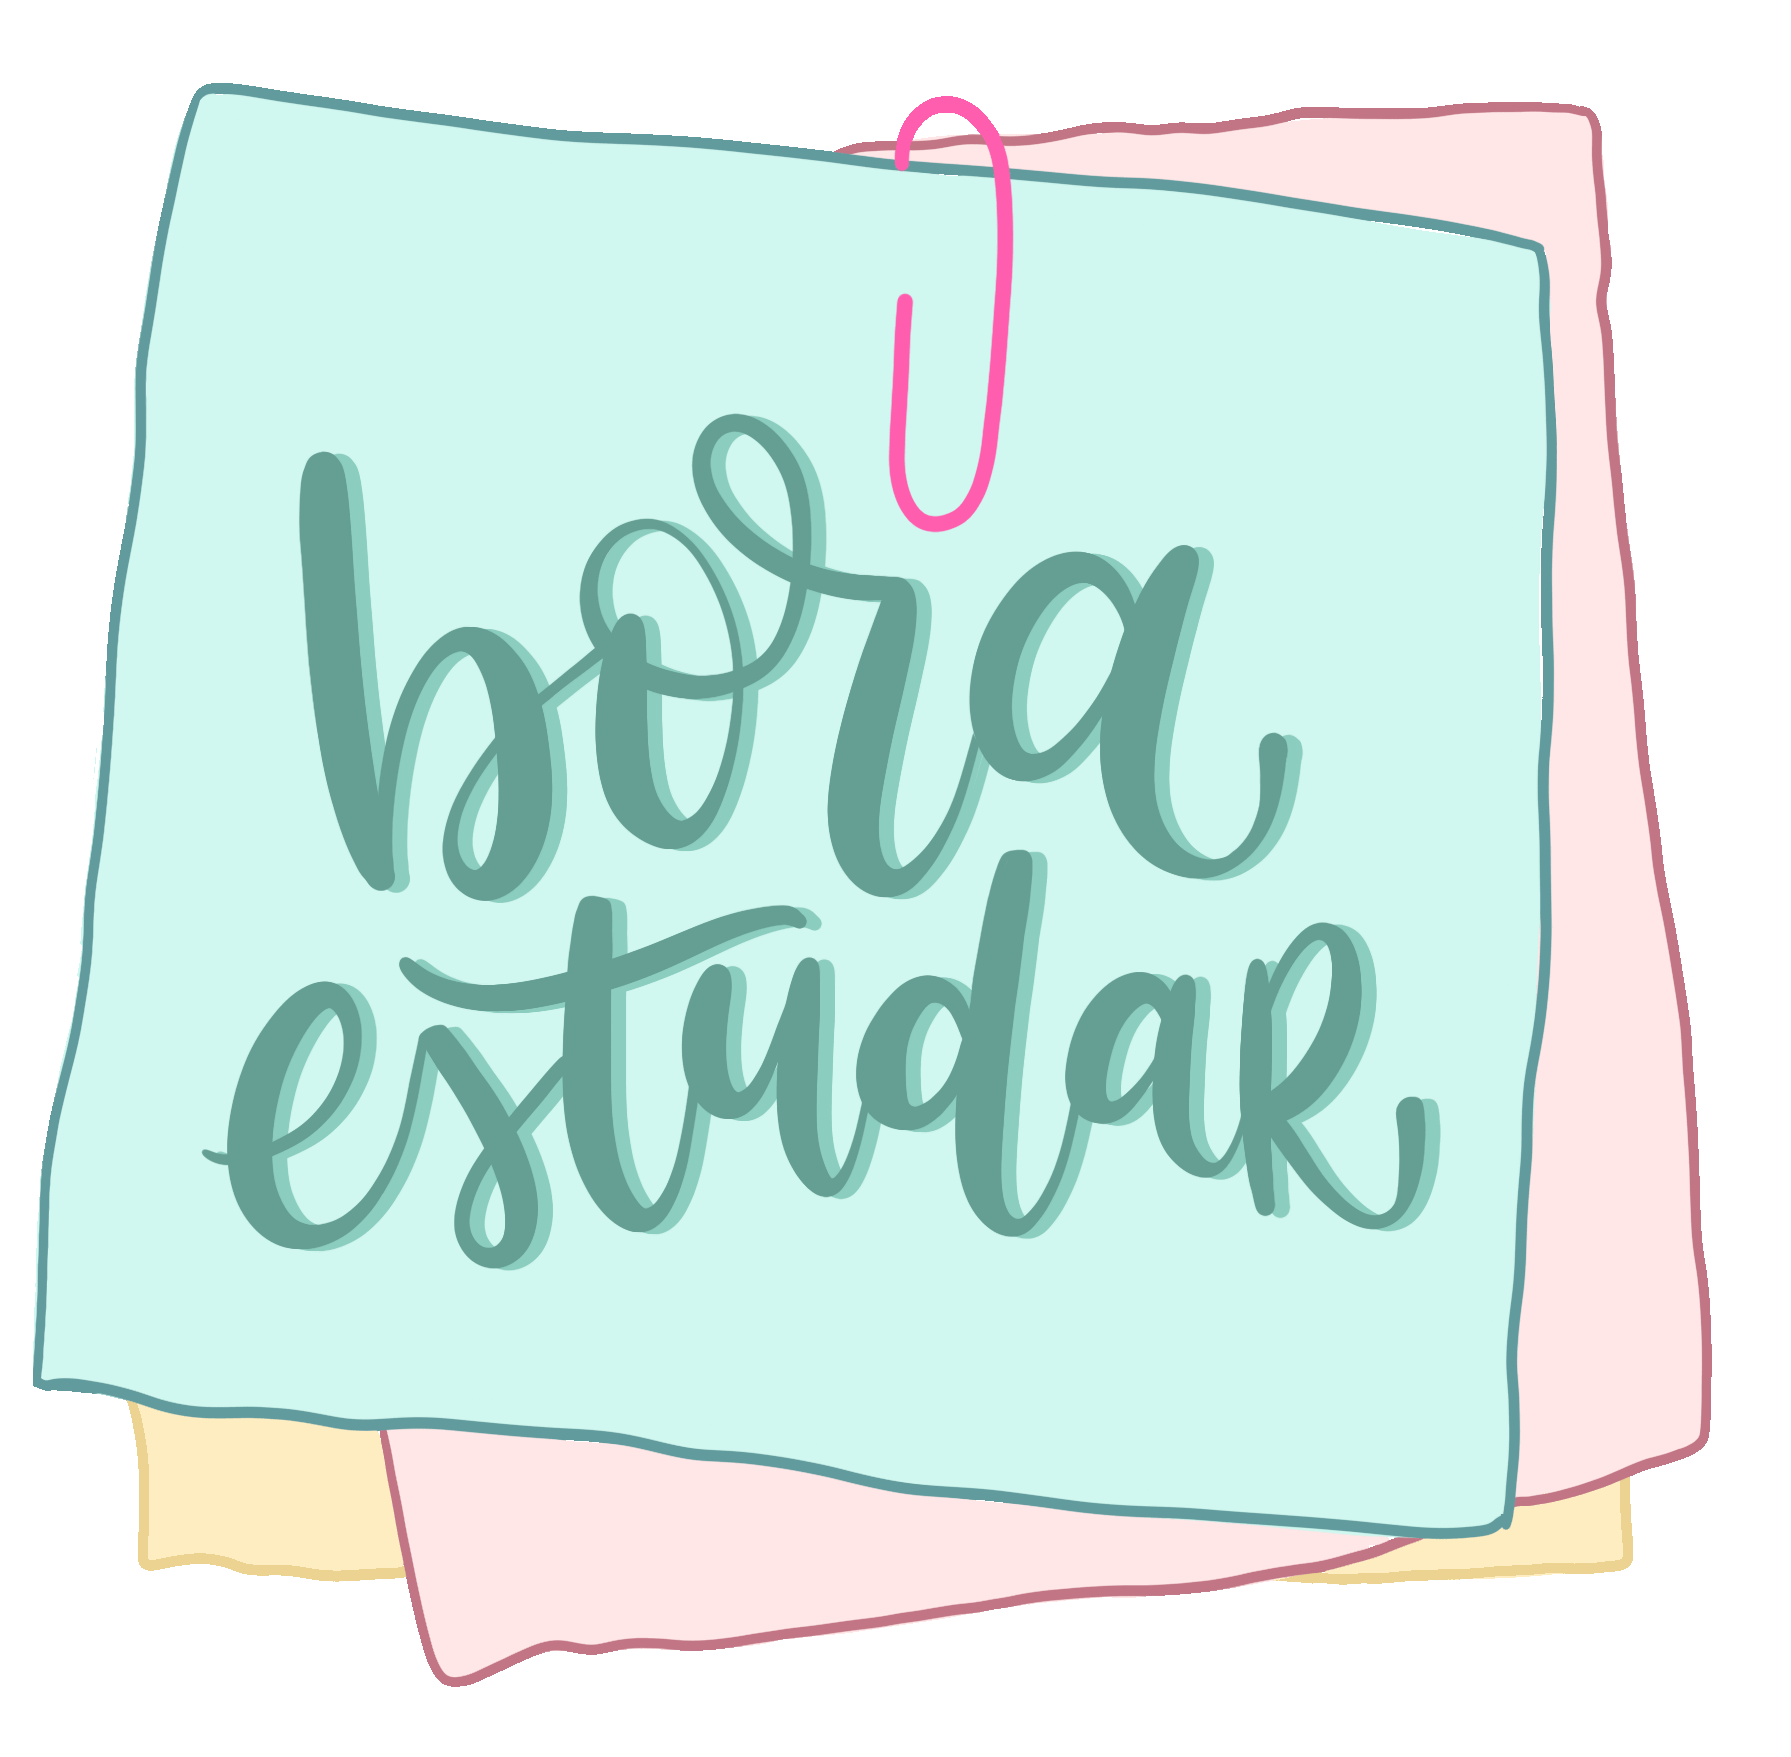 Studyanaluiza Bora Estudar Sticker for iOS & Android | GIPHY